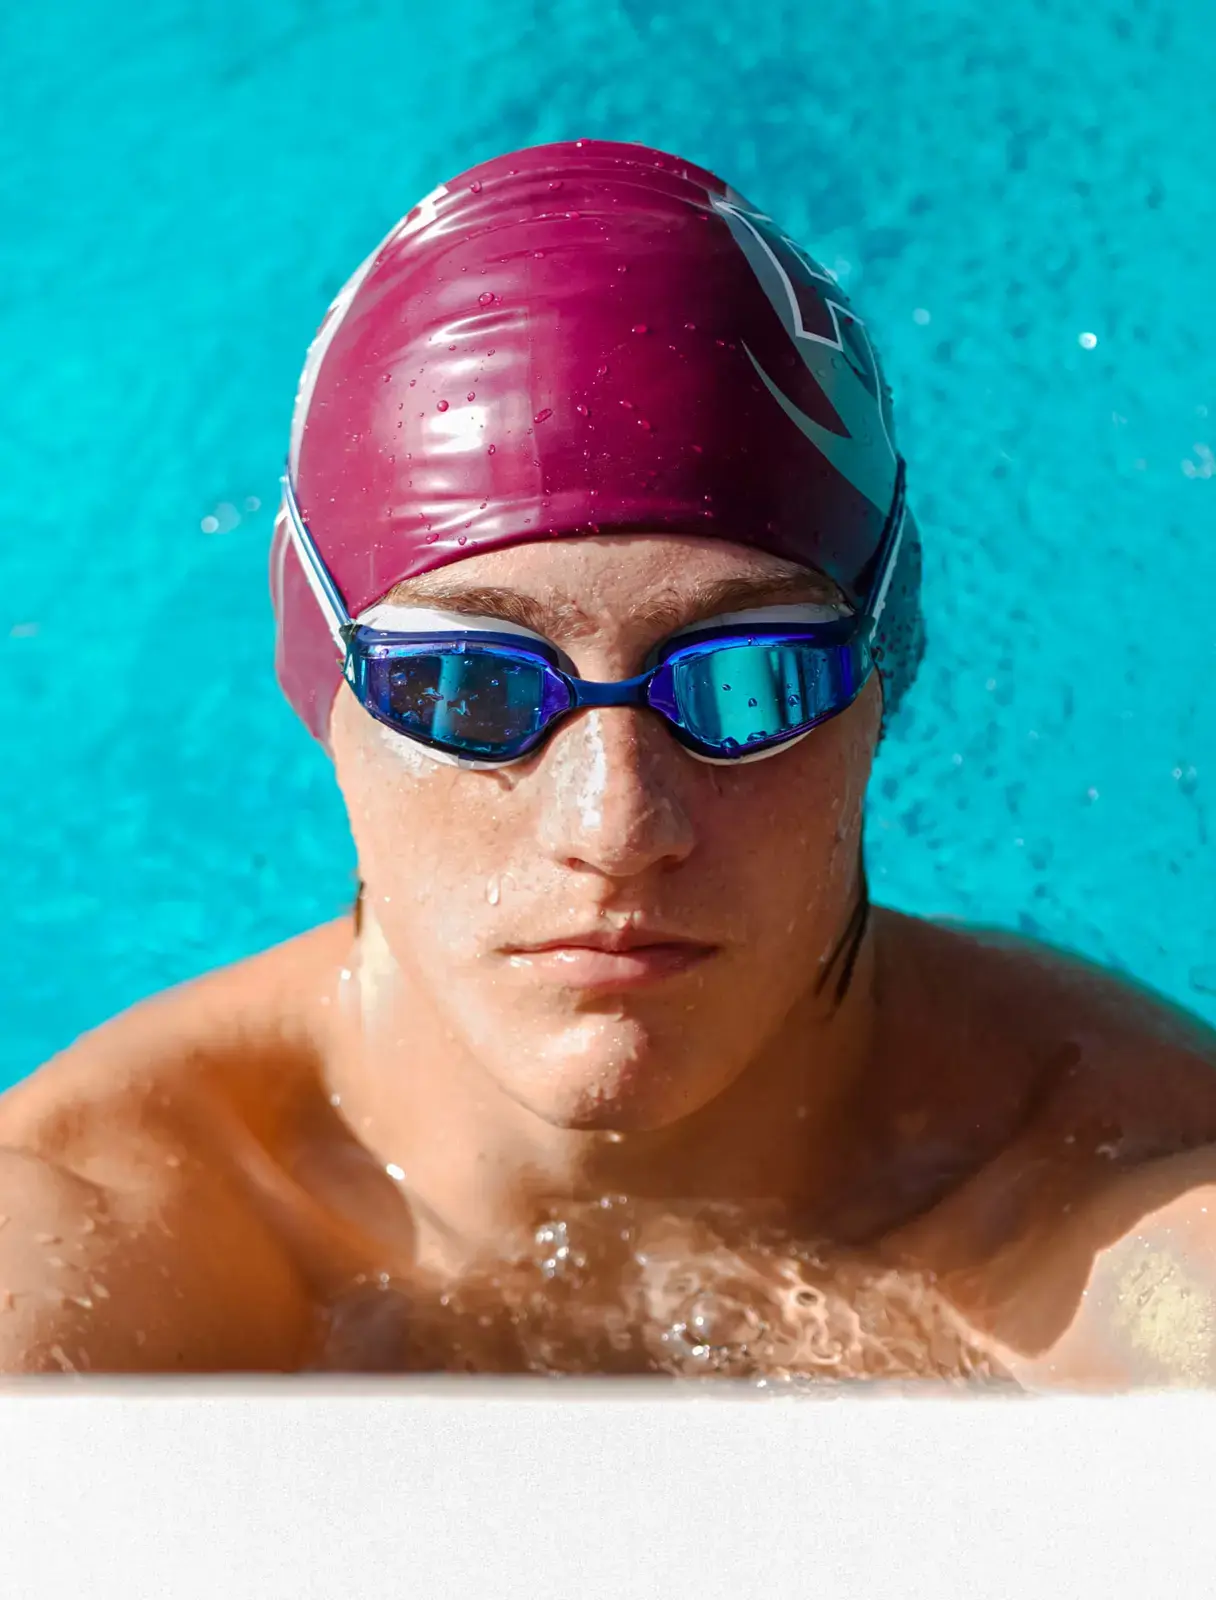 Porter-Gaud student swimming